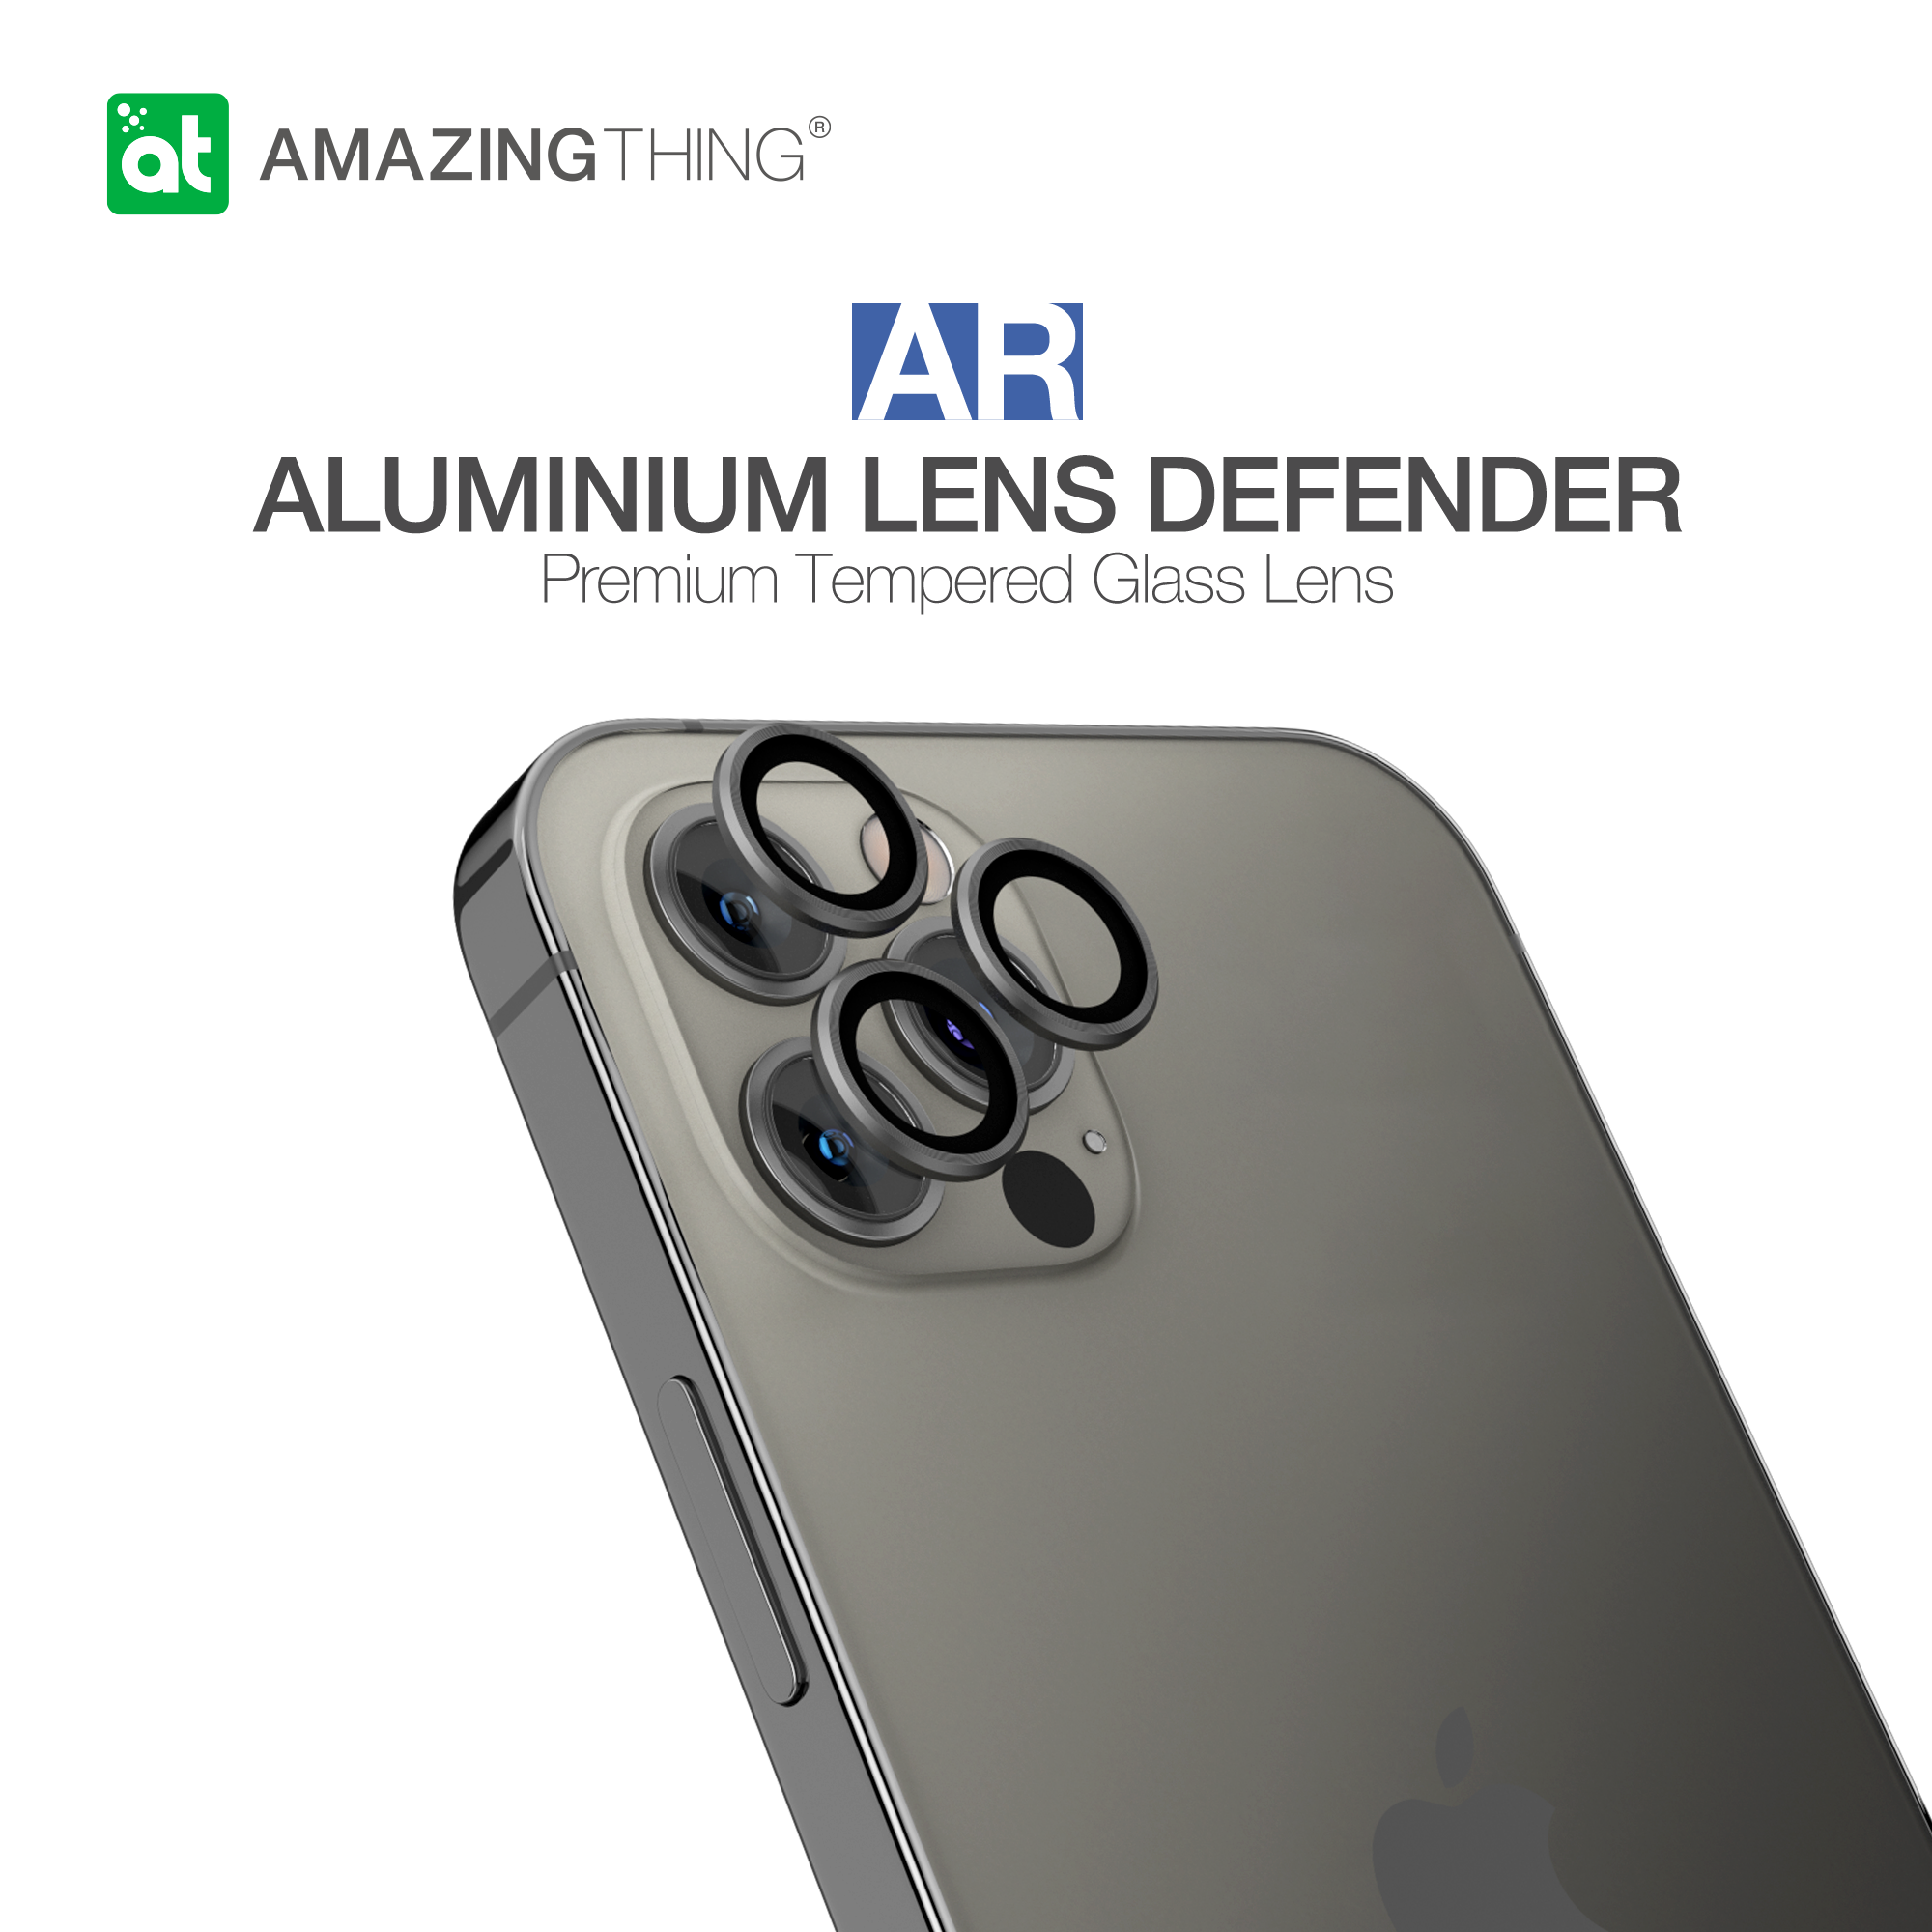 AMAZINGthing Aluminum Lens Defender for iPhone 12 Pro Max - TECH STREET